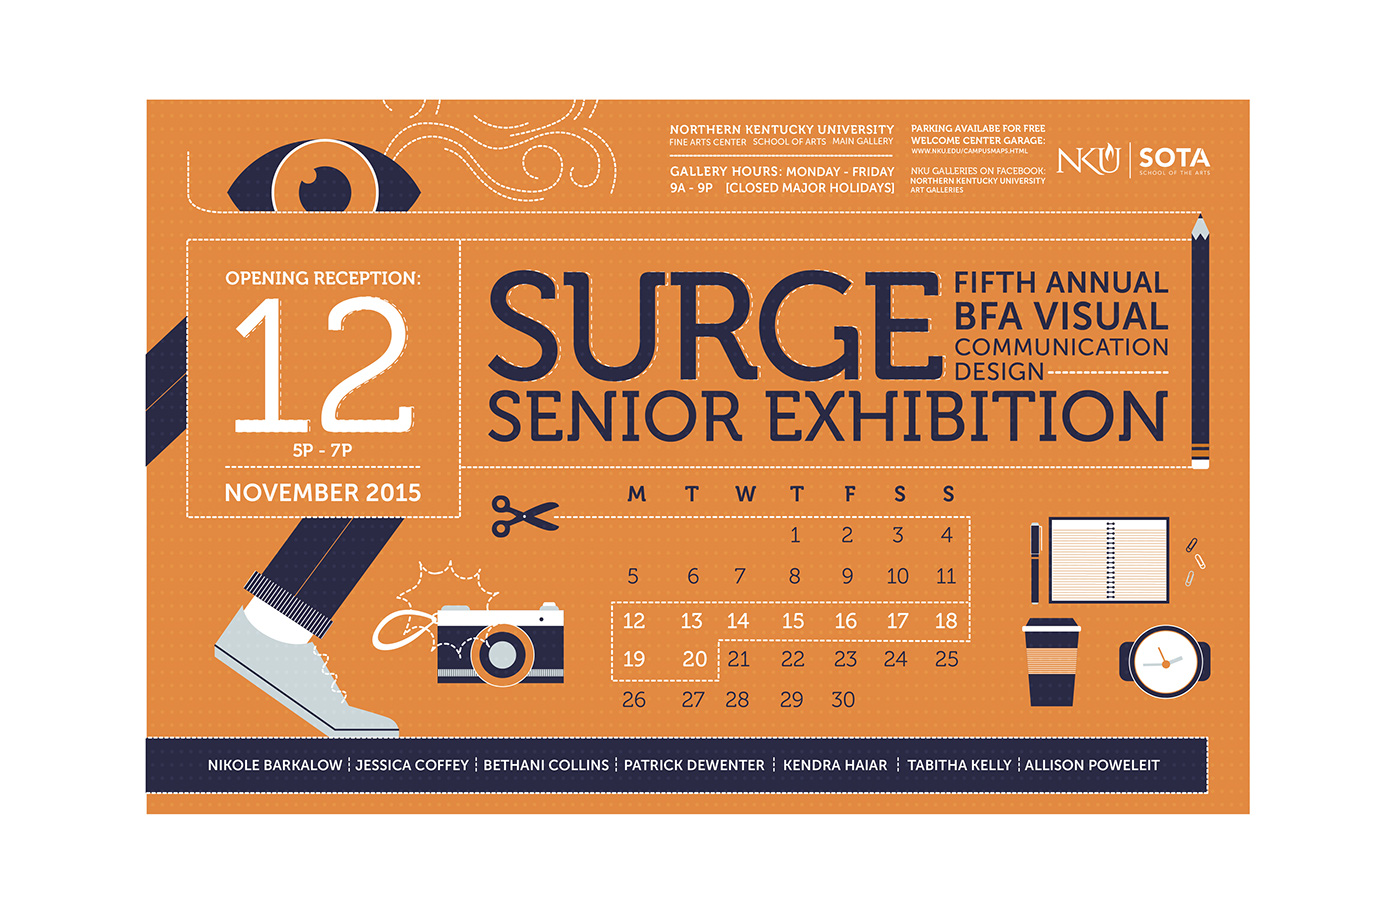 #surge #typography #surge2015 #posterdesign #graphicDesign #layout #layoutdesign #northernkentuckyuniversity #nku #nkusota #VisualCommunicationDesign #Poster #Bold #Design #BFA